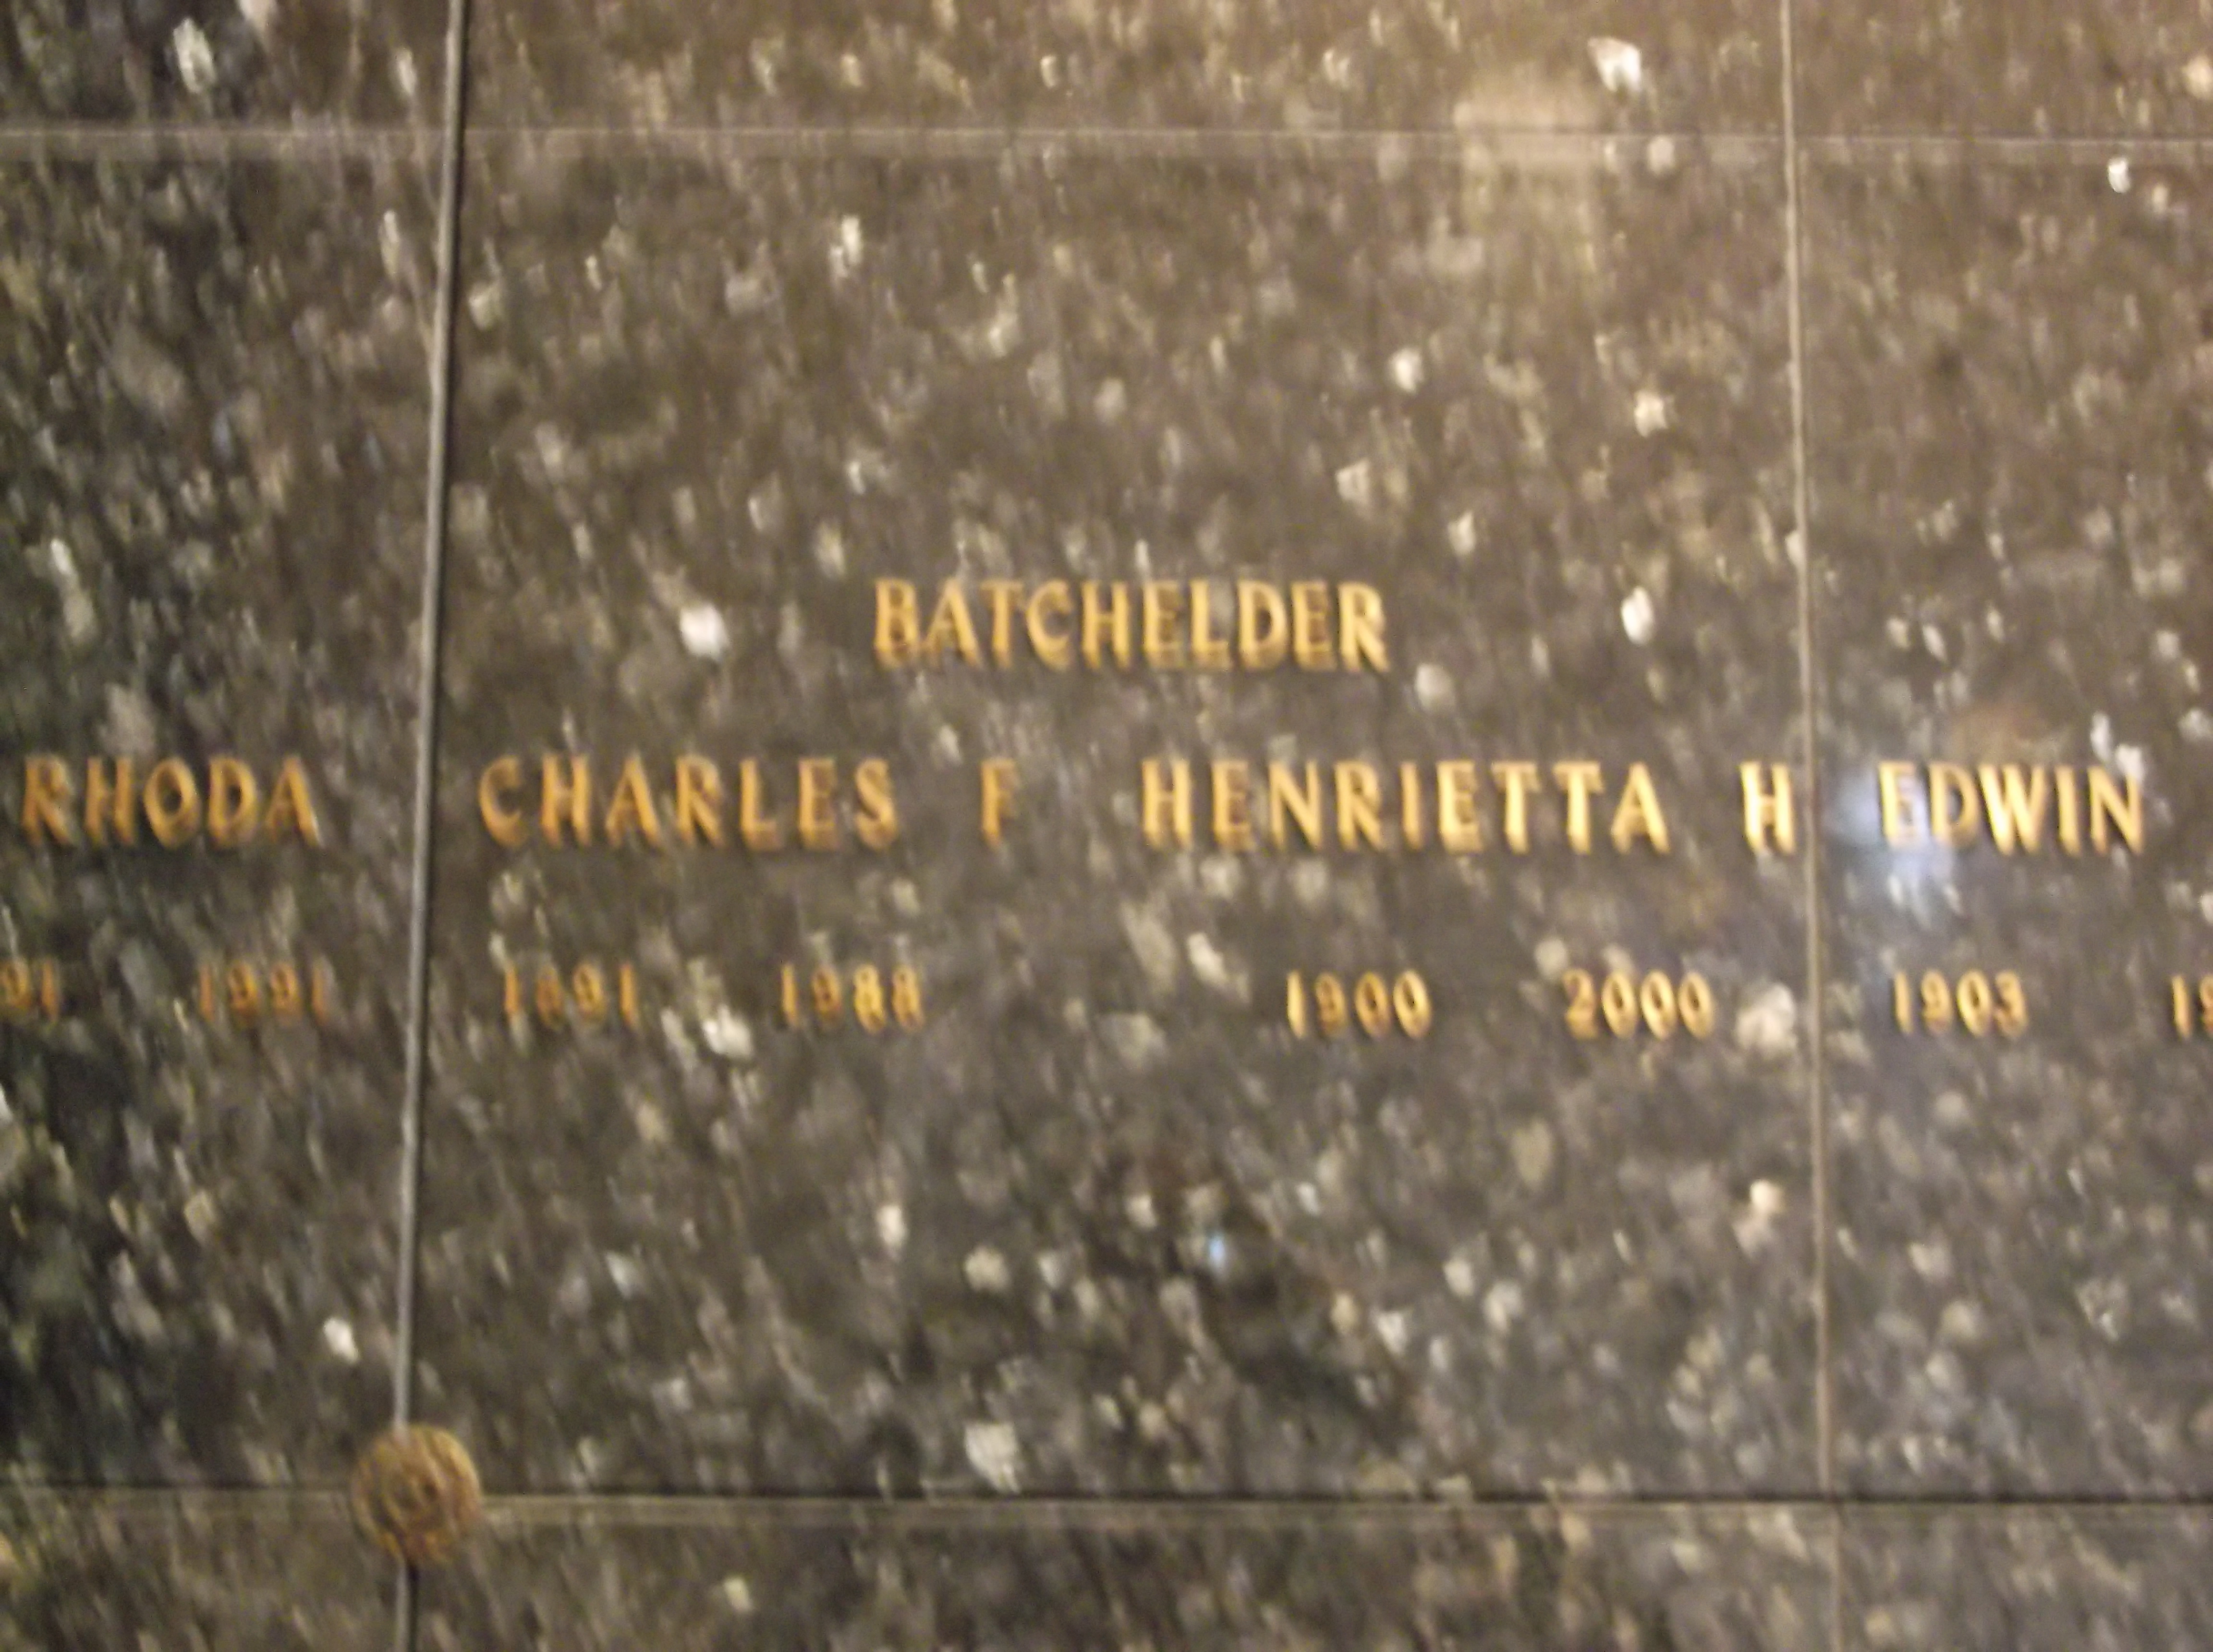 Charles F Batchelder